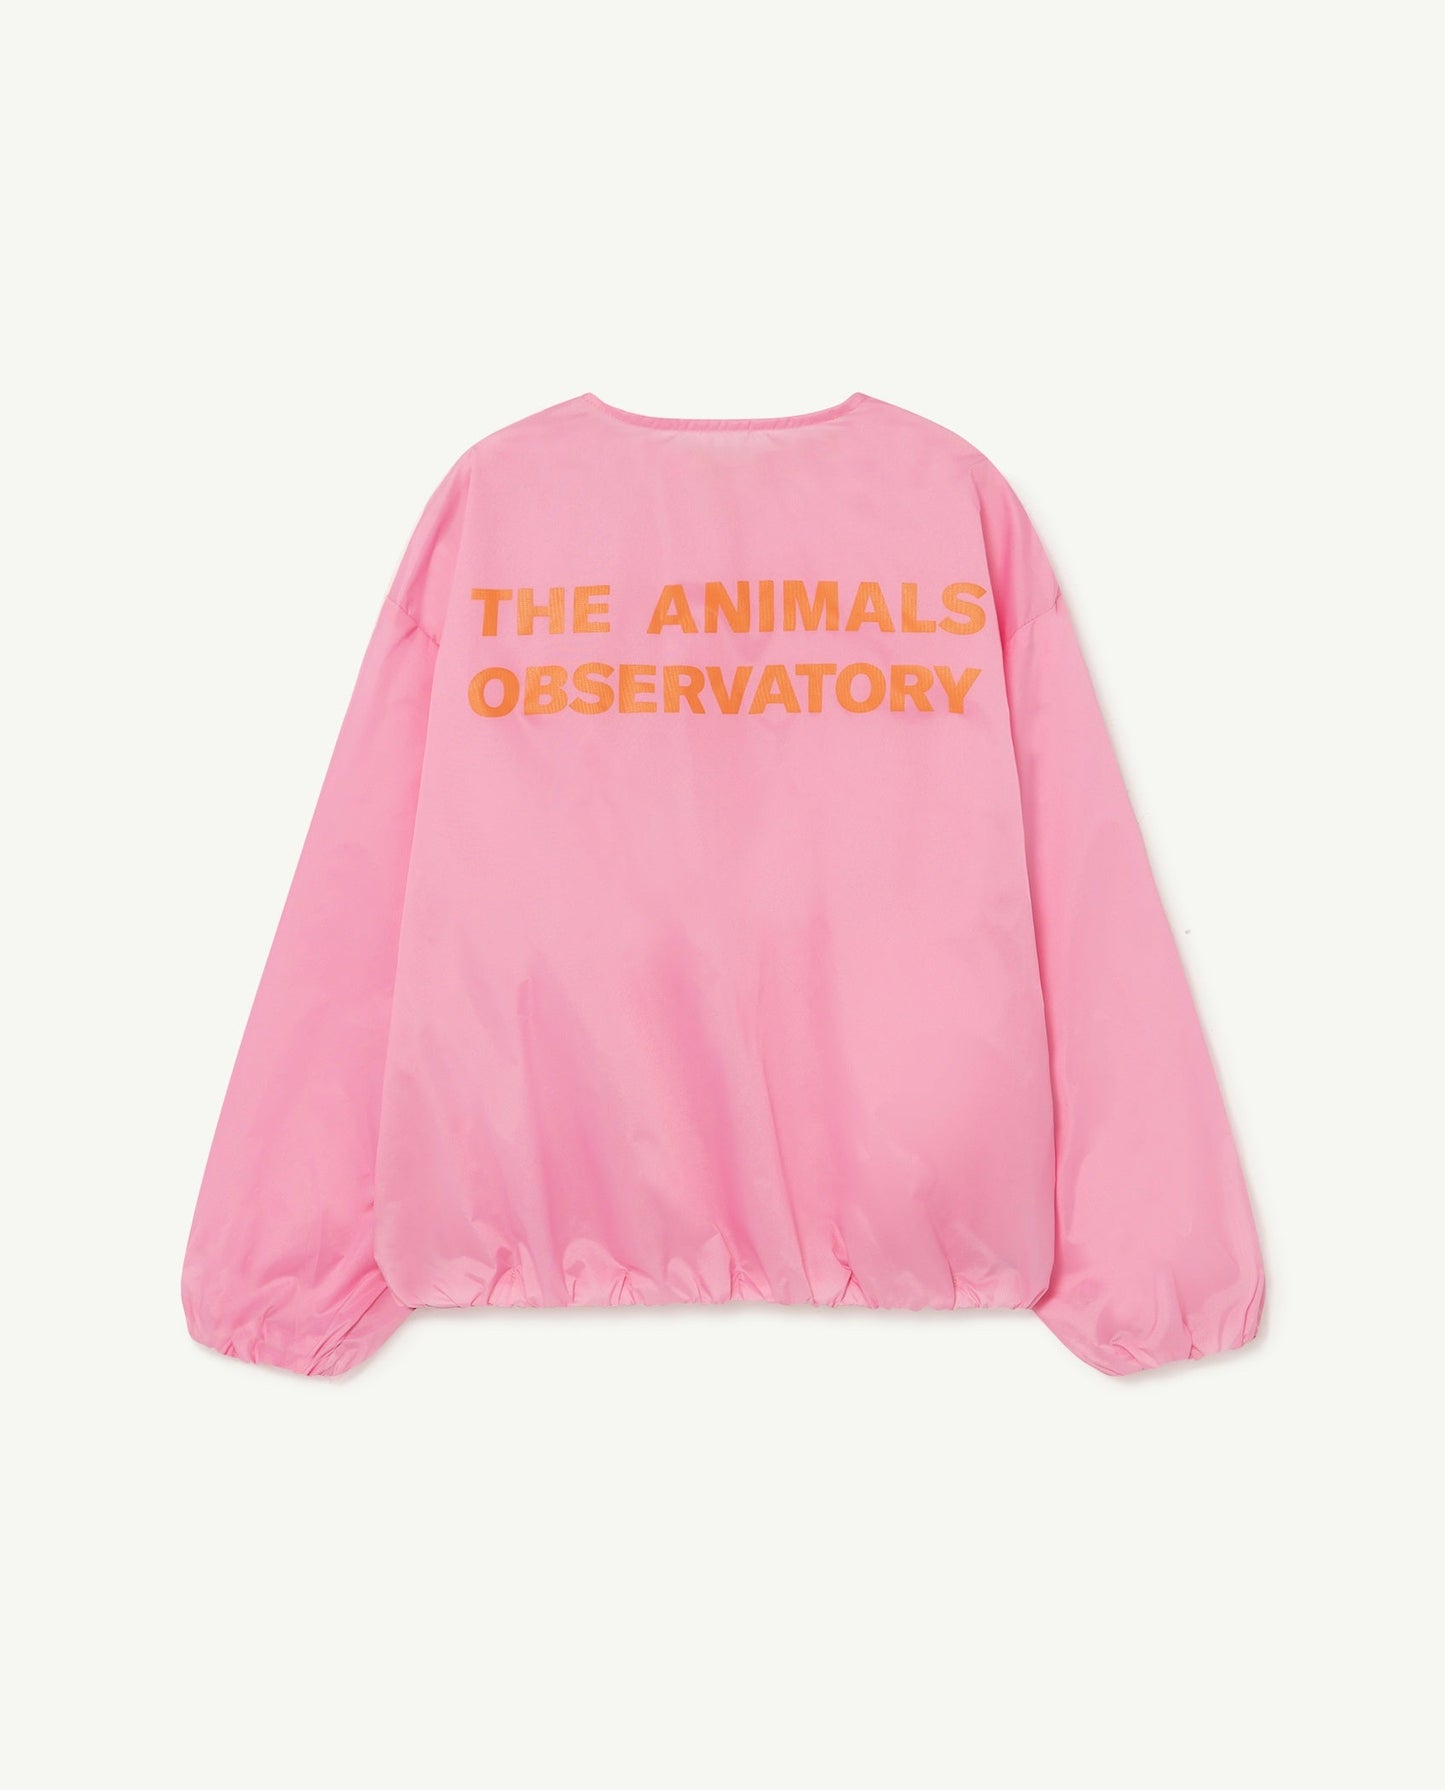 Carp kids+ jacket soft pink logo Outerwear The Animals Observatory 